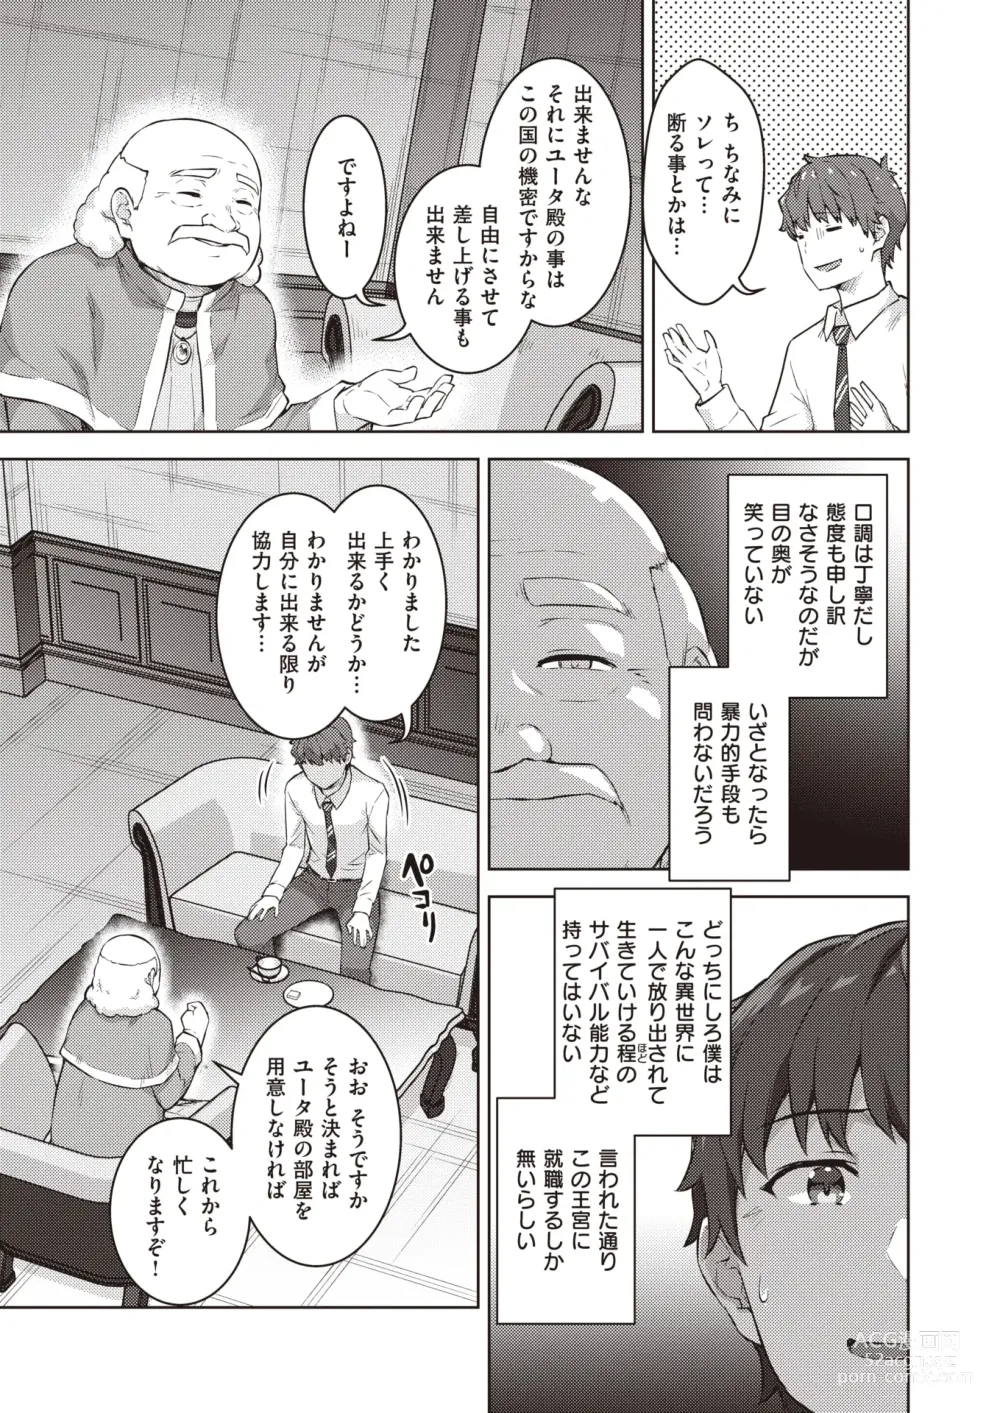 Page 54 of manga Isekai Rakuten Vol. 30